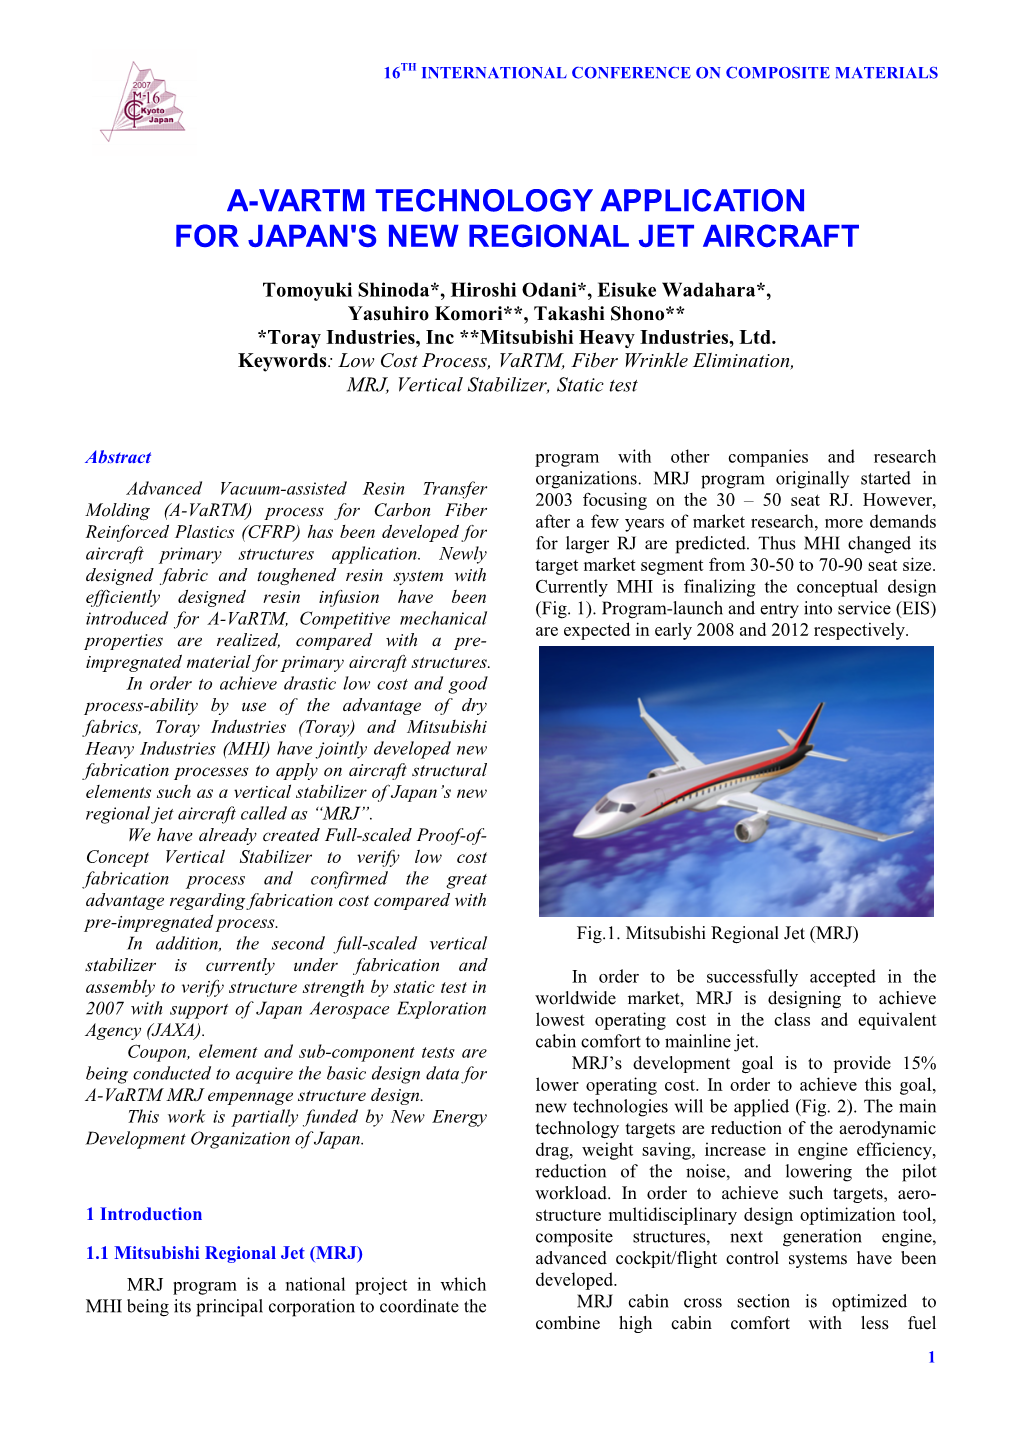 A-Vartm Technology Application for Japan's New Regional Jet Aircraft